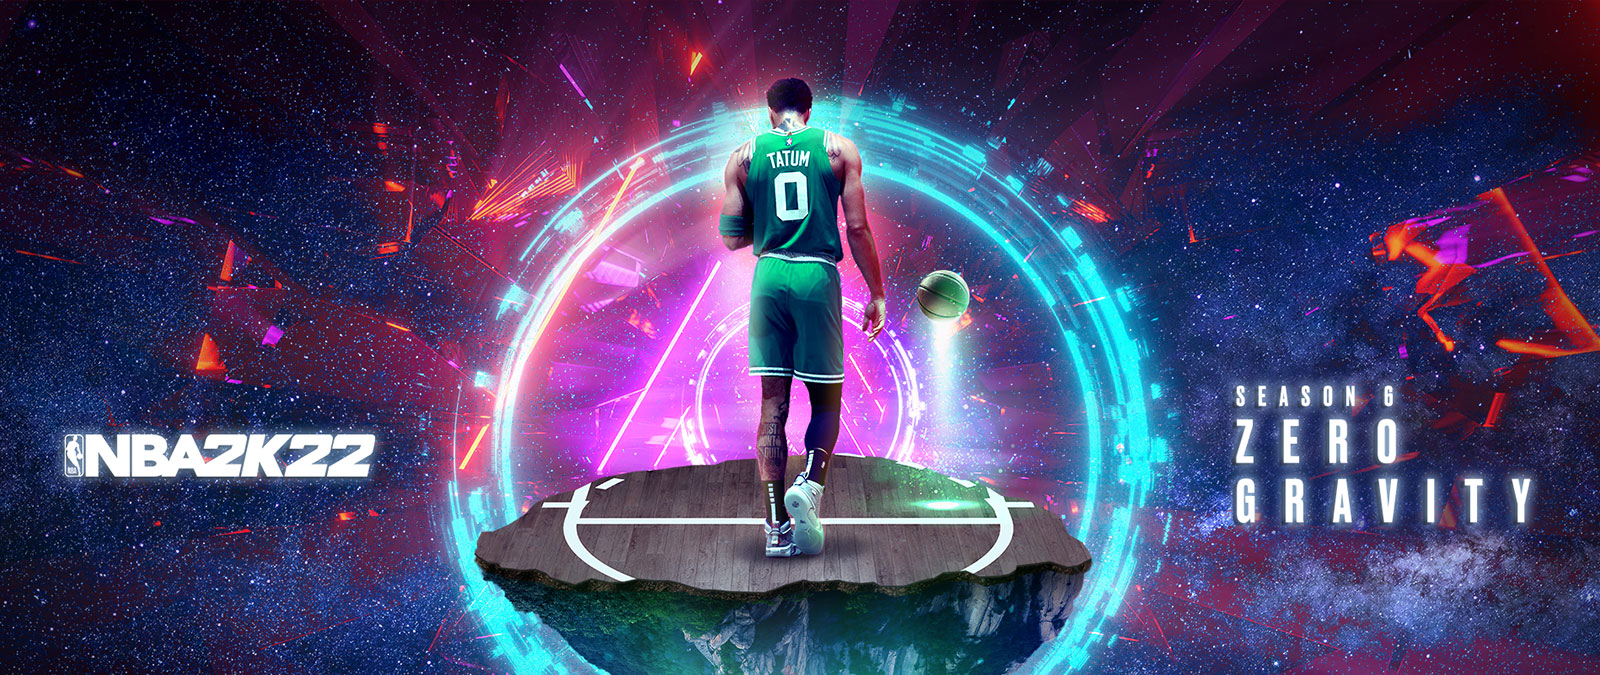 NBA 2K22，Season 6: 零重力，在太空場景中，Tatum 站在一塊漂浮的籃球場上，能量環圍繞著他。